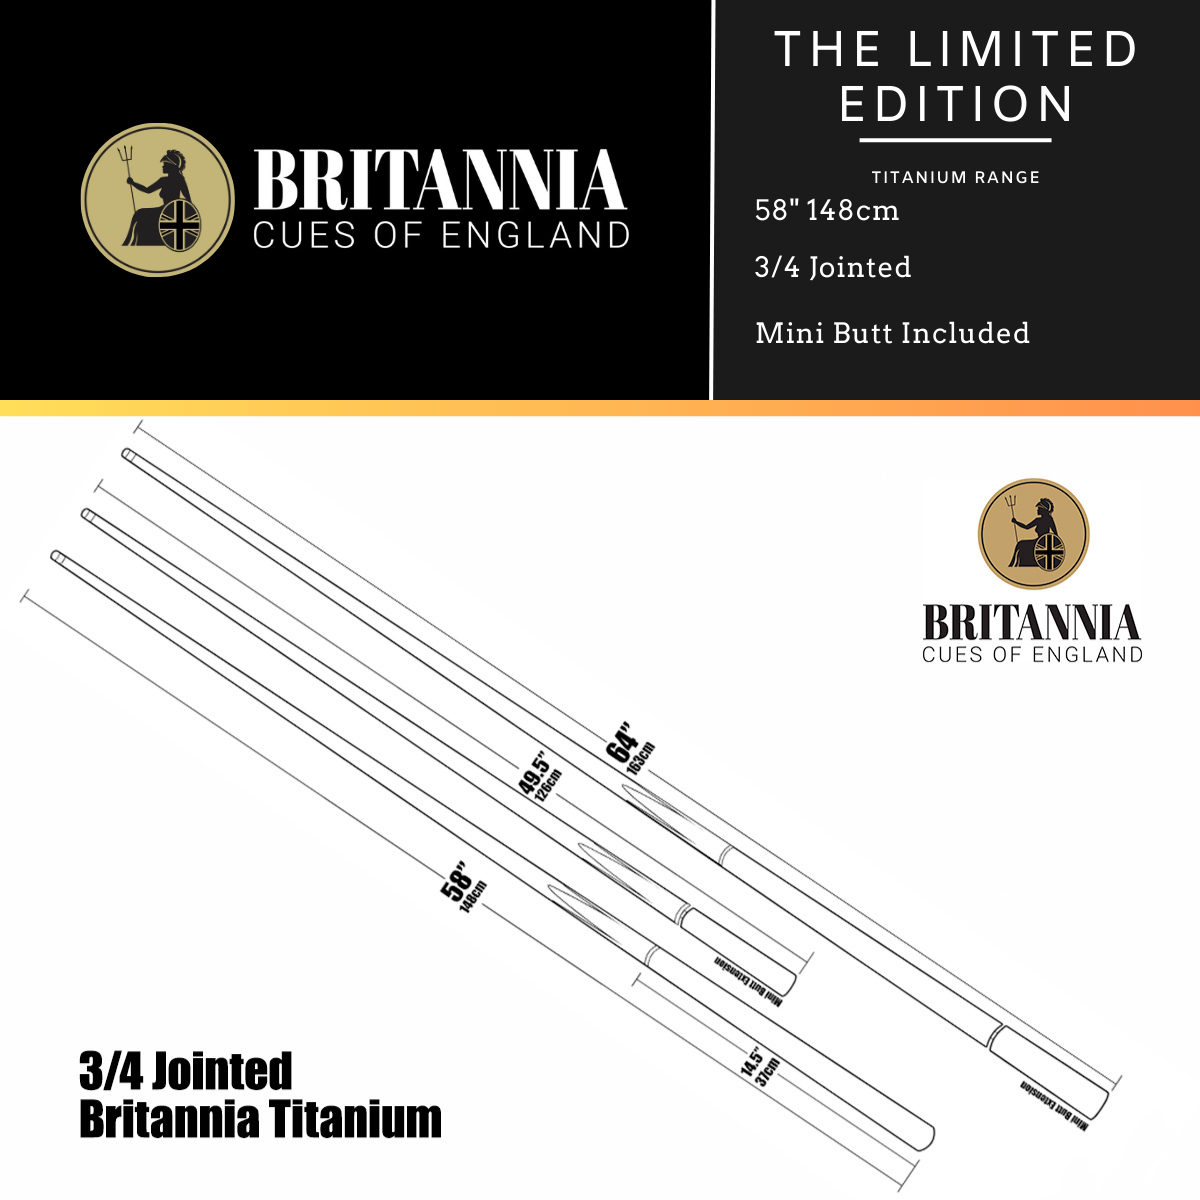 Britannia 3/4 Jointed Limited Edition Titanium Snooker Cue